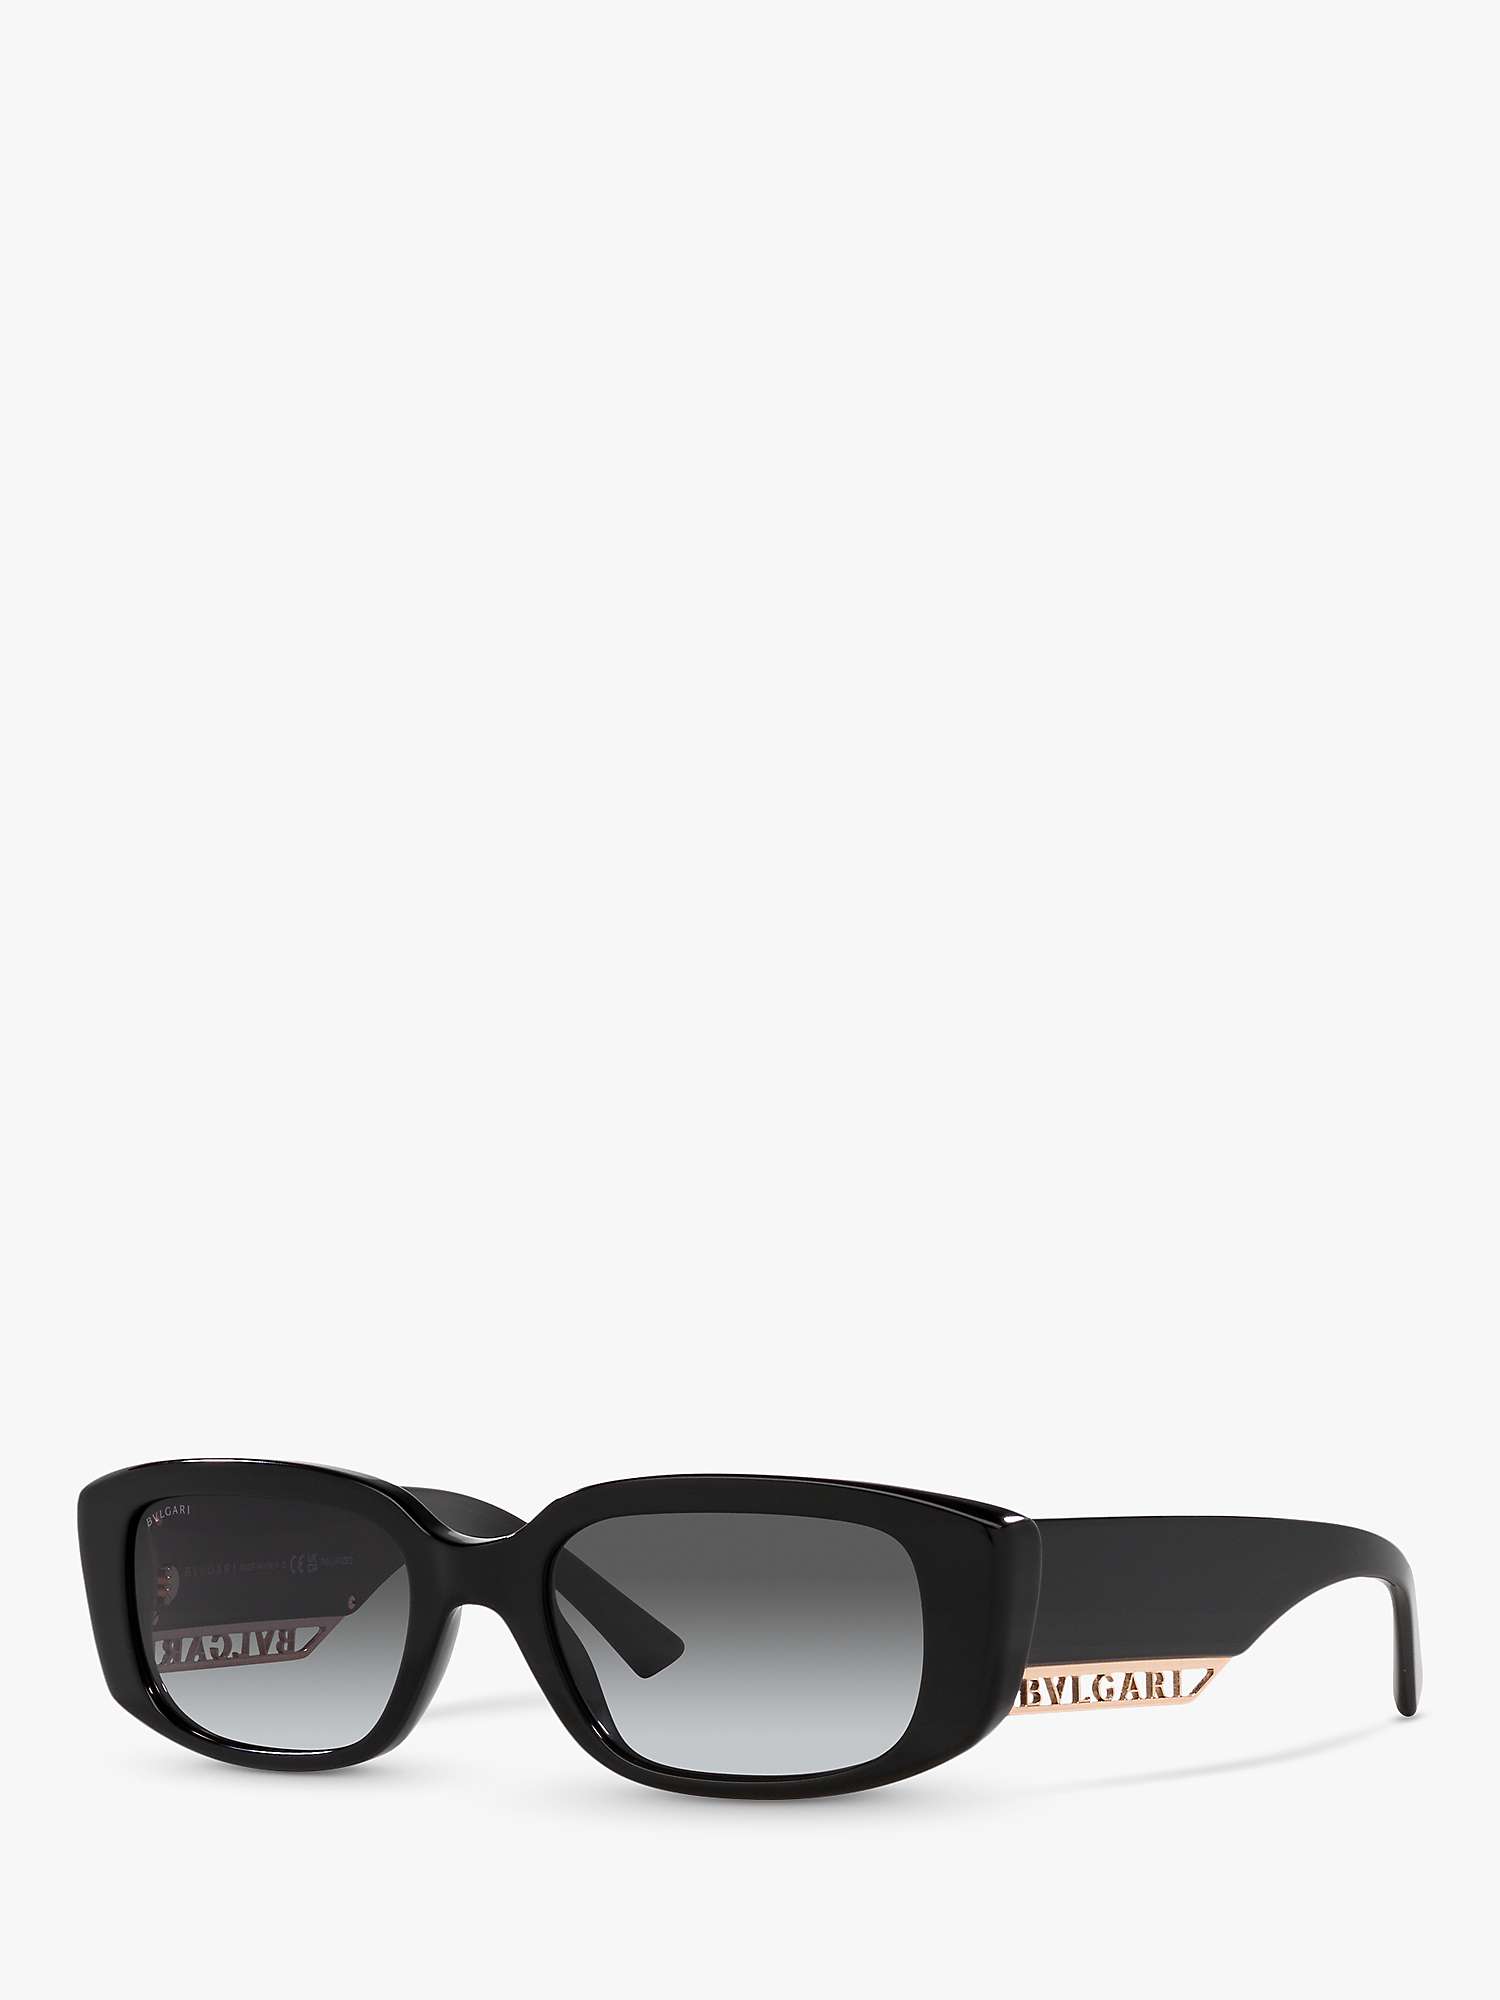 Buy BVLGARI BV8259 Women's Rectangular Sunglasses, Black Online at johnlewis.com